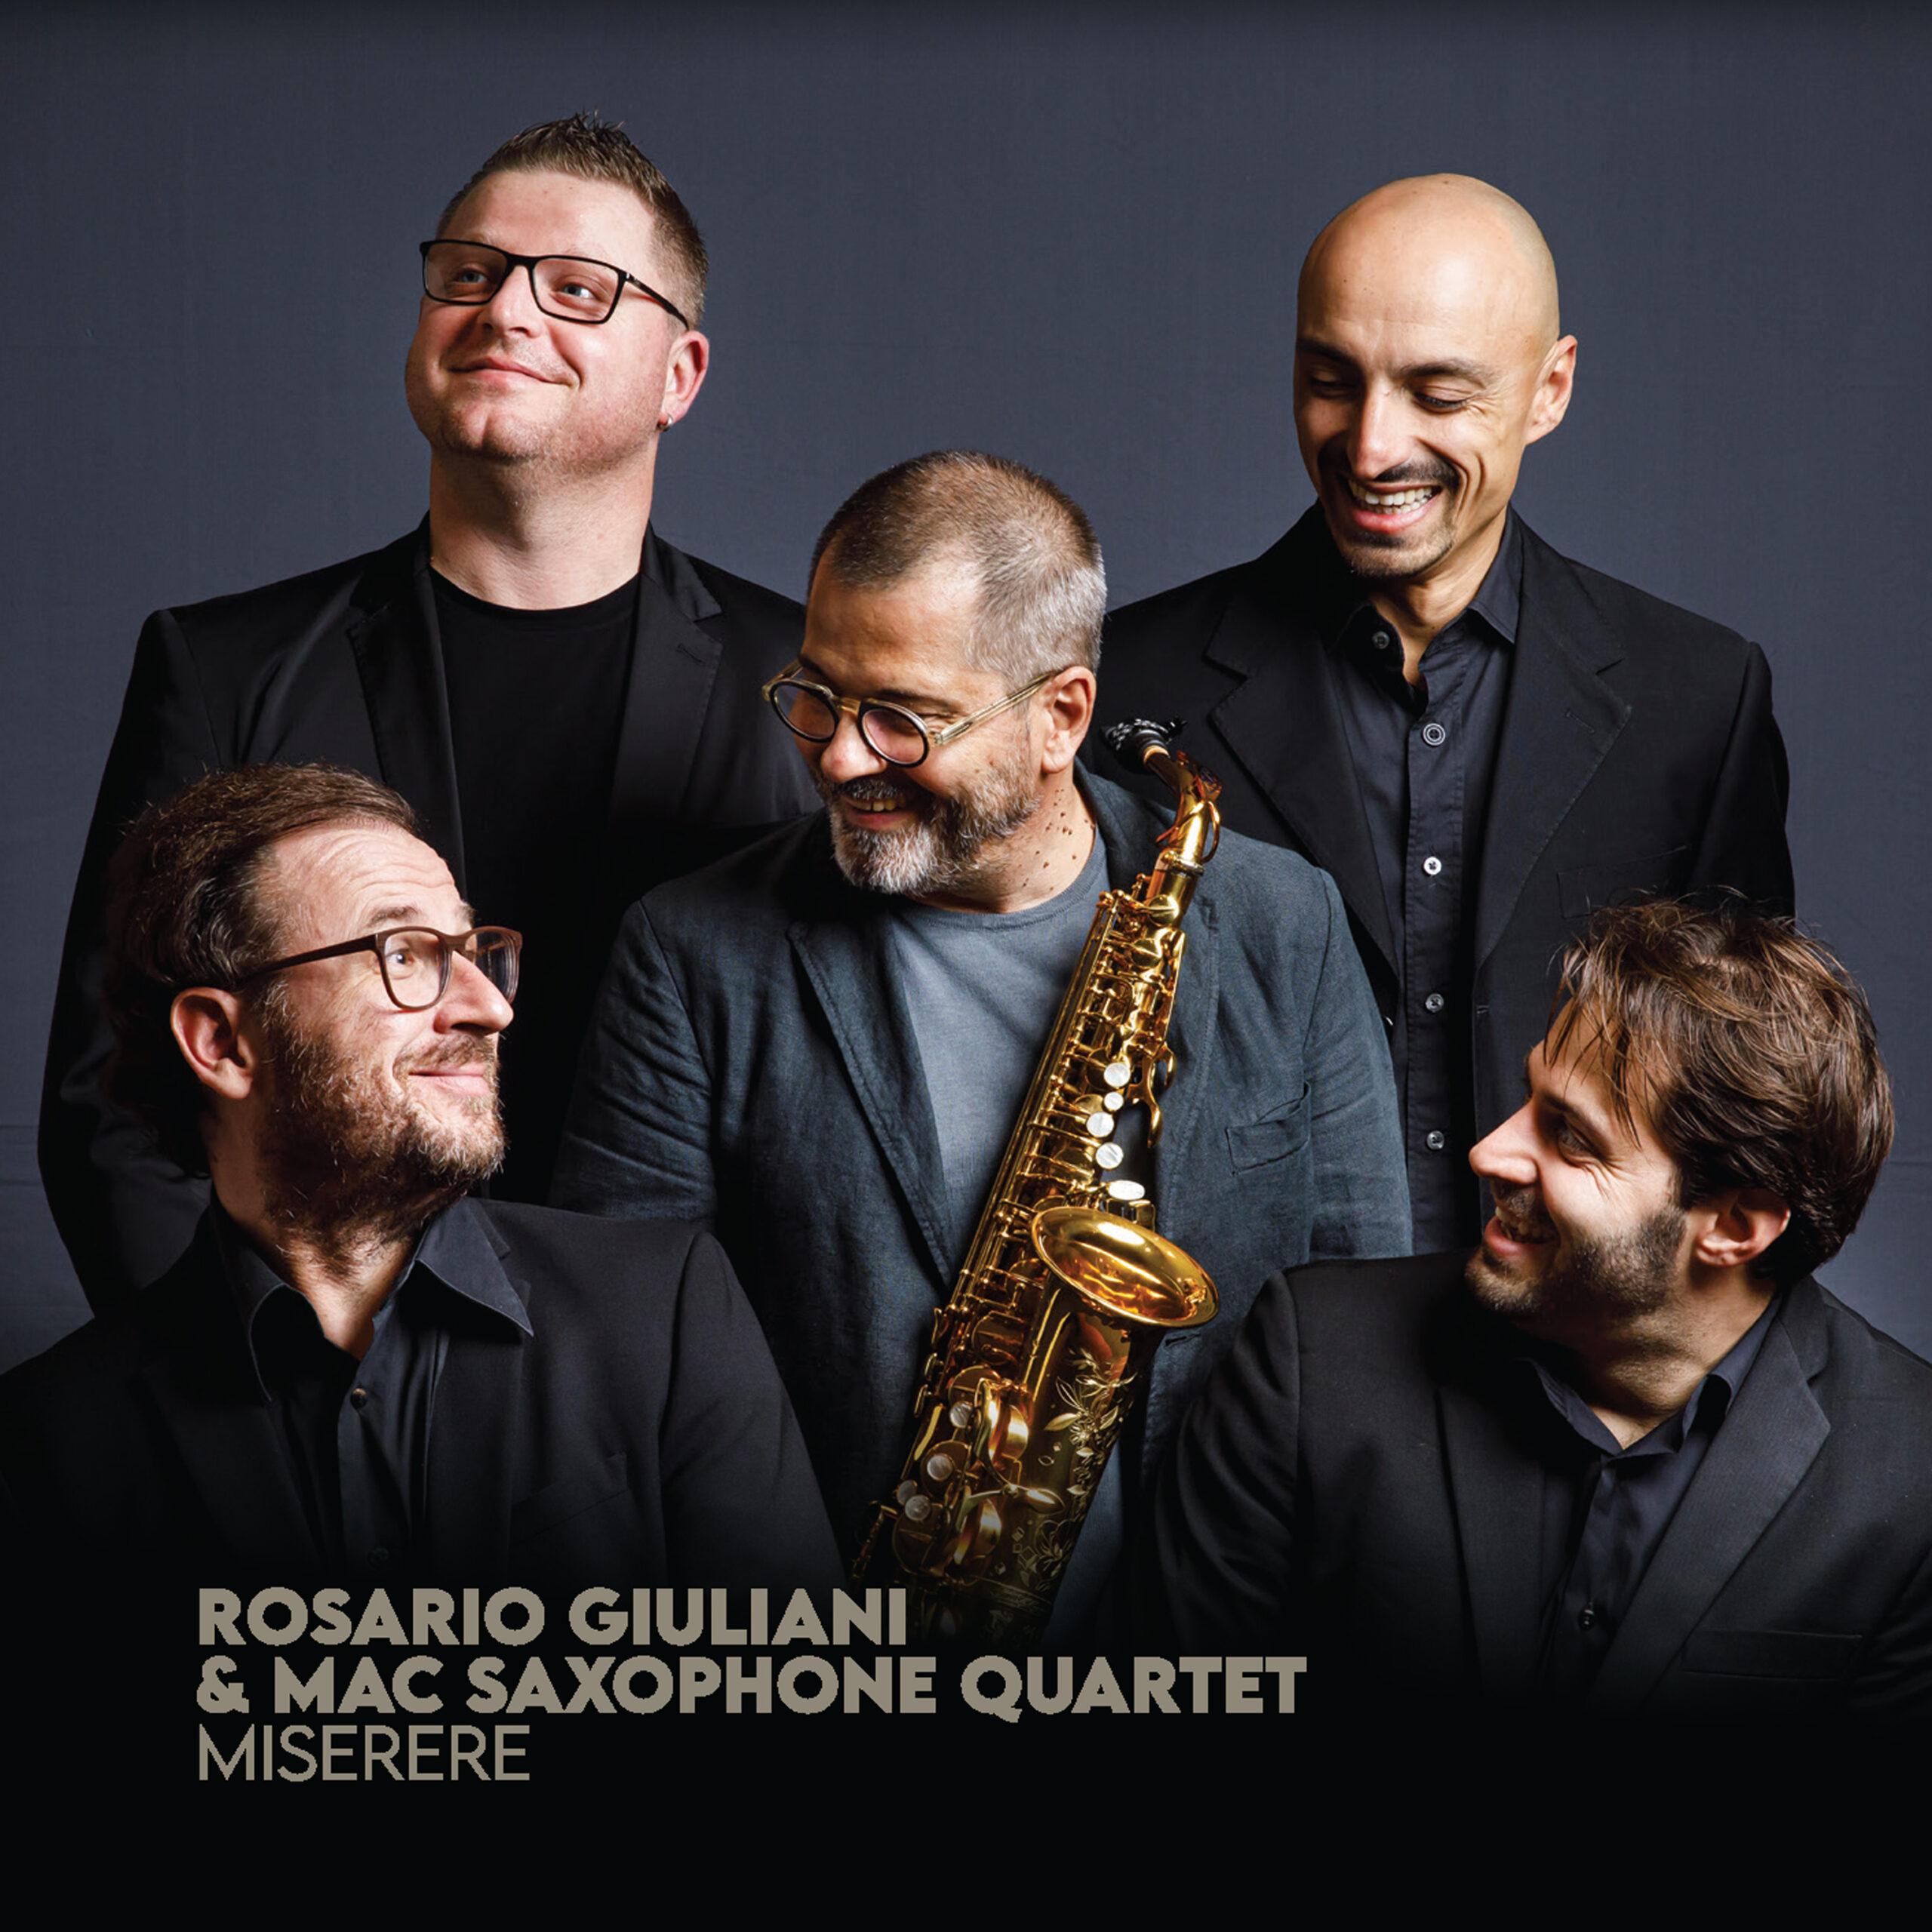 MISERERE: Rosario Giuliani & Mac Saxophone Quartet